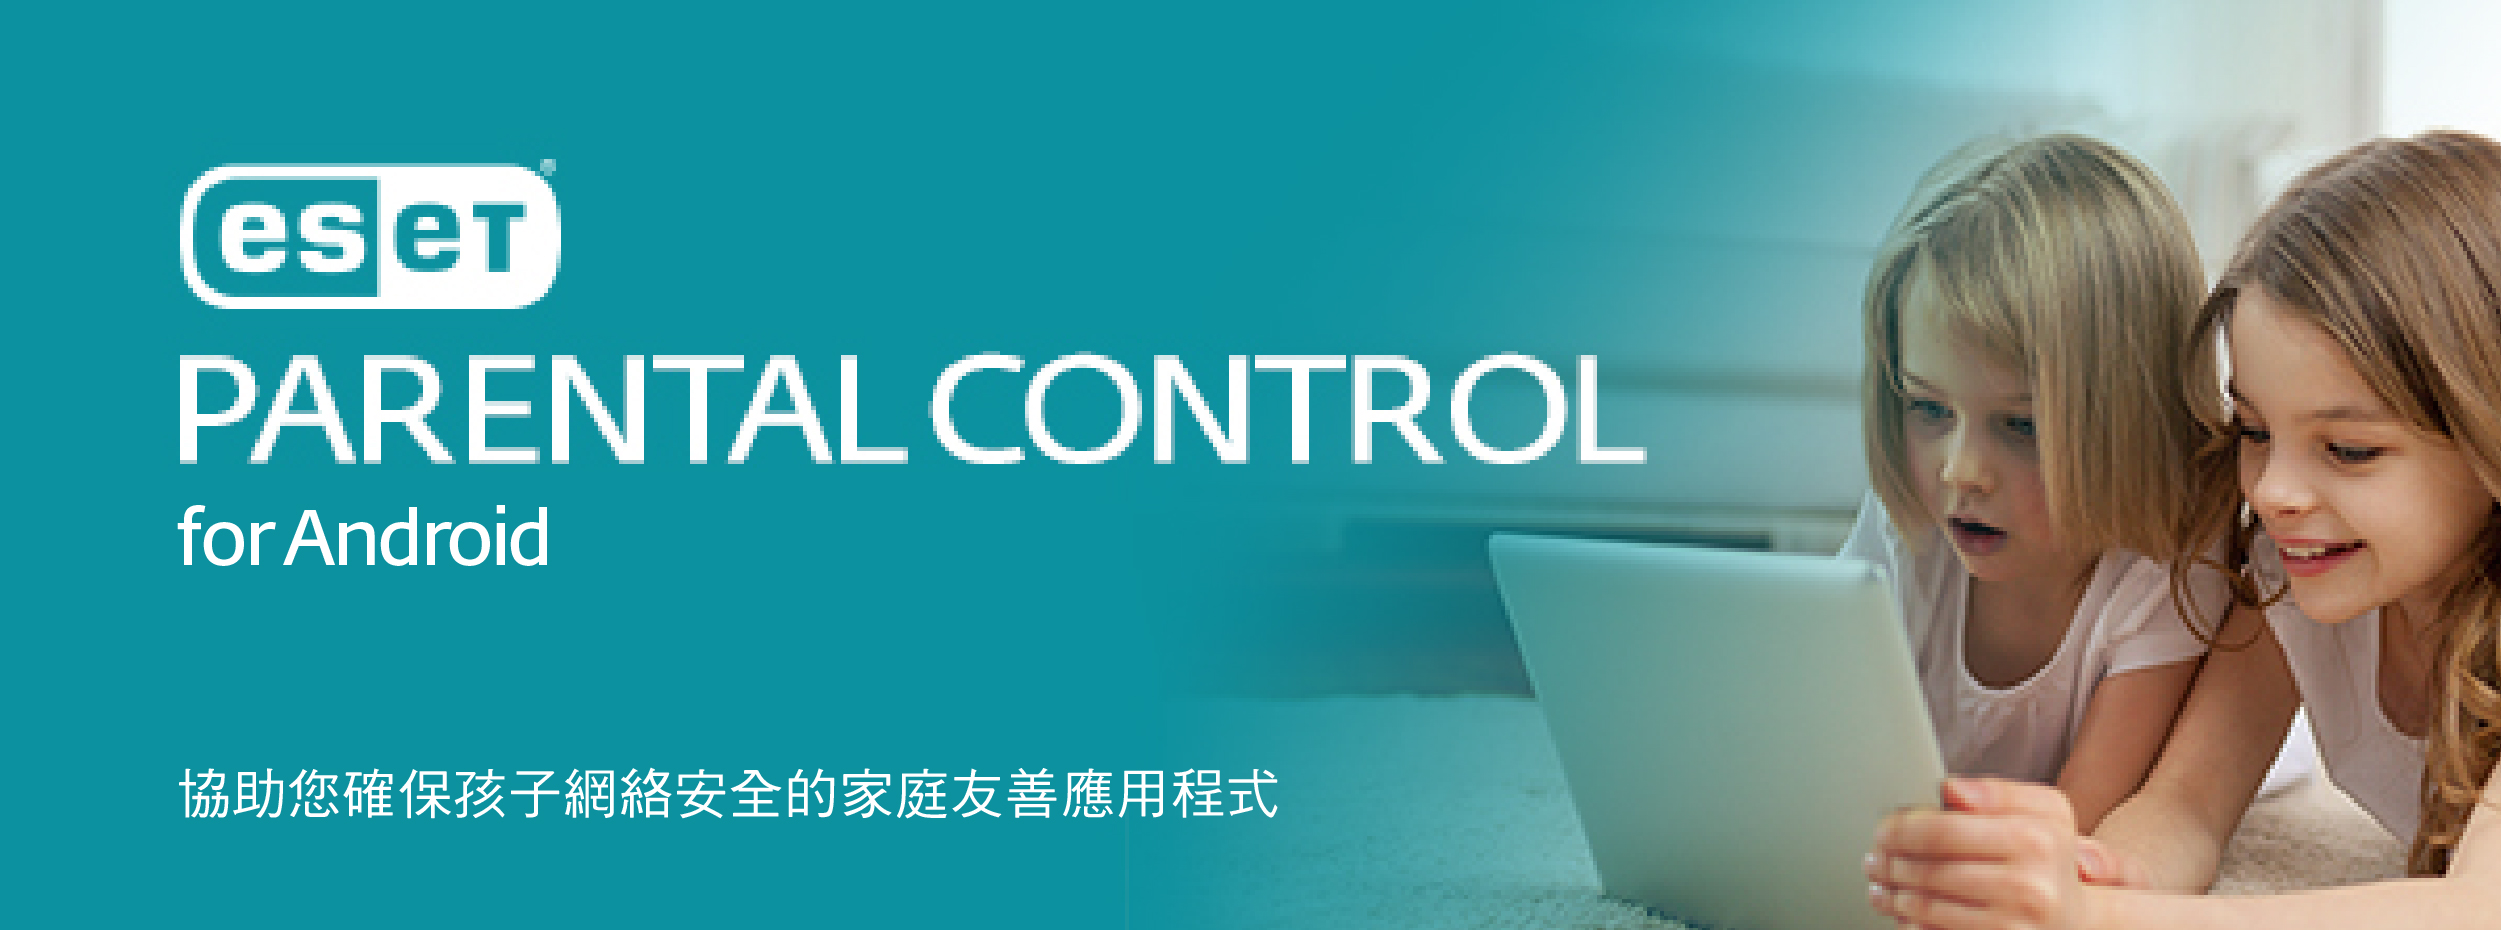 ESET Parental Control for Android - ESET 網上商店 - 防毒軟件與間諜和程式保護 - 香港官方網站